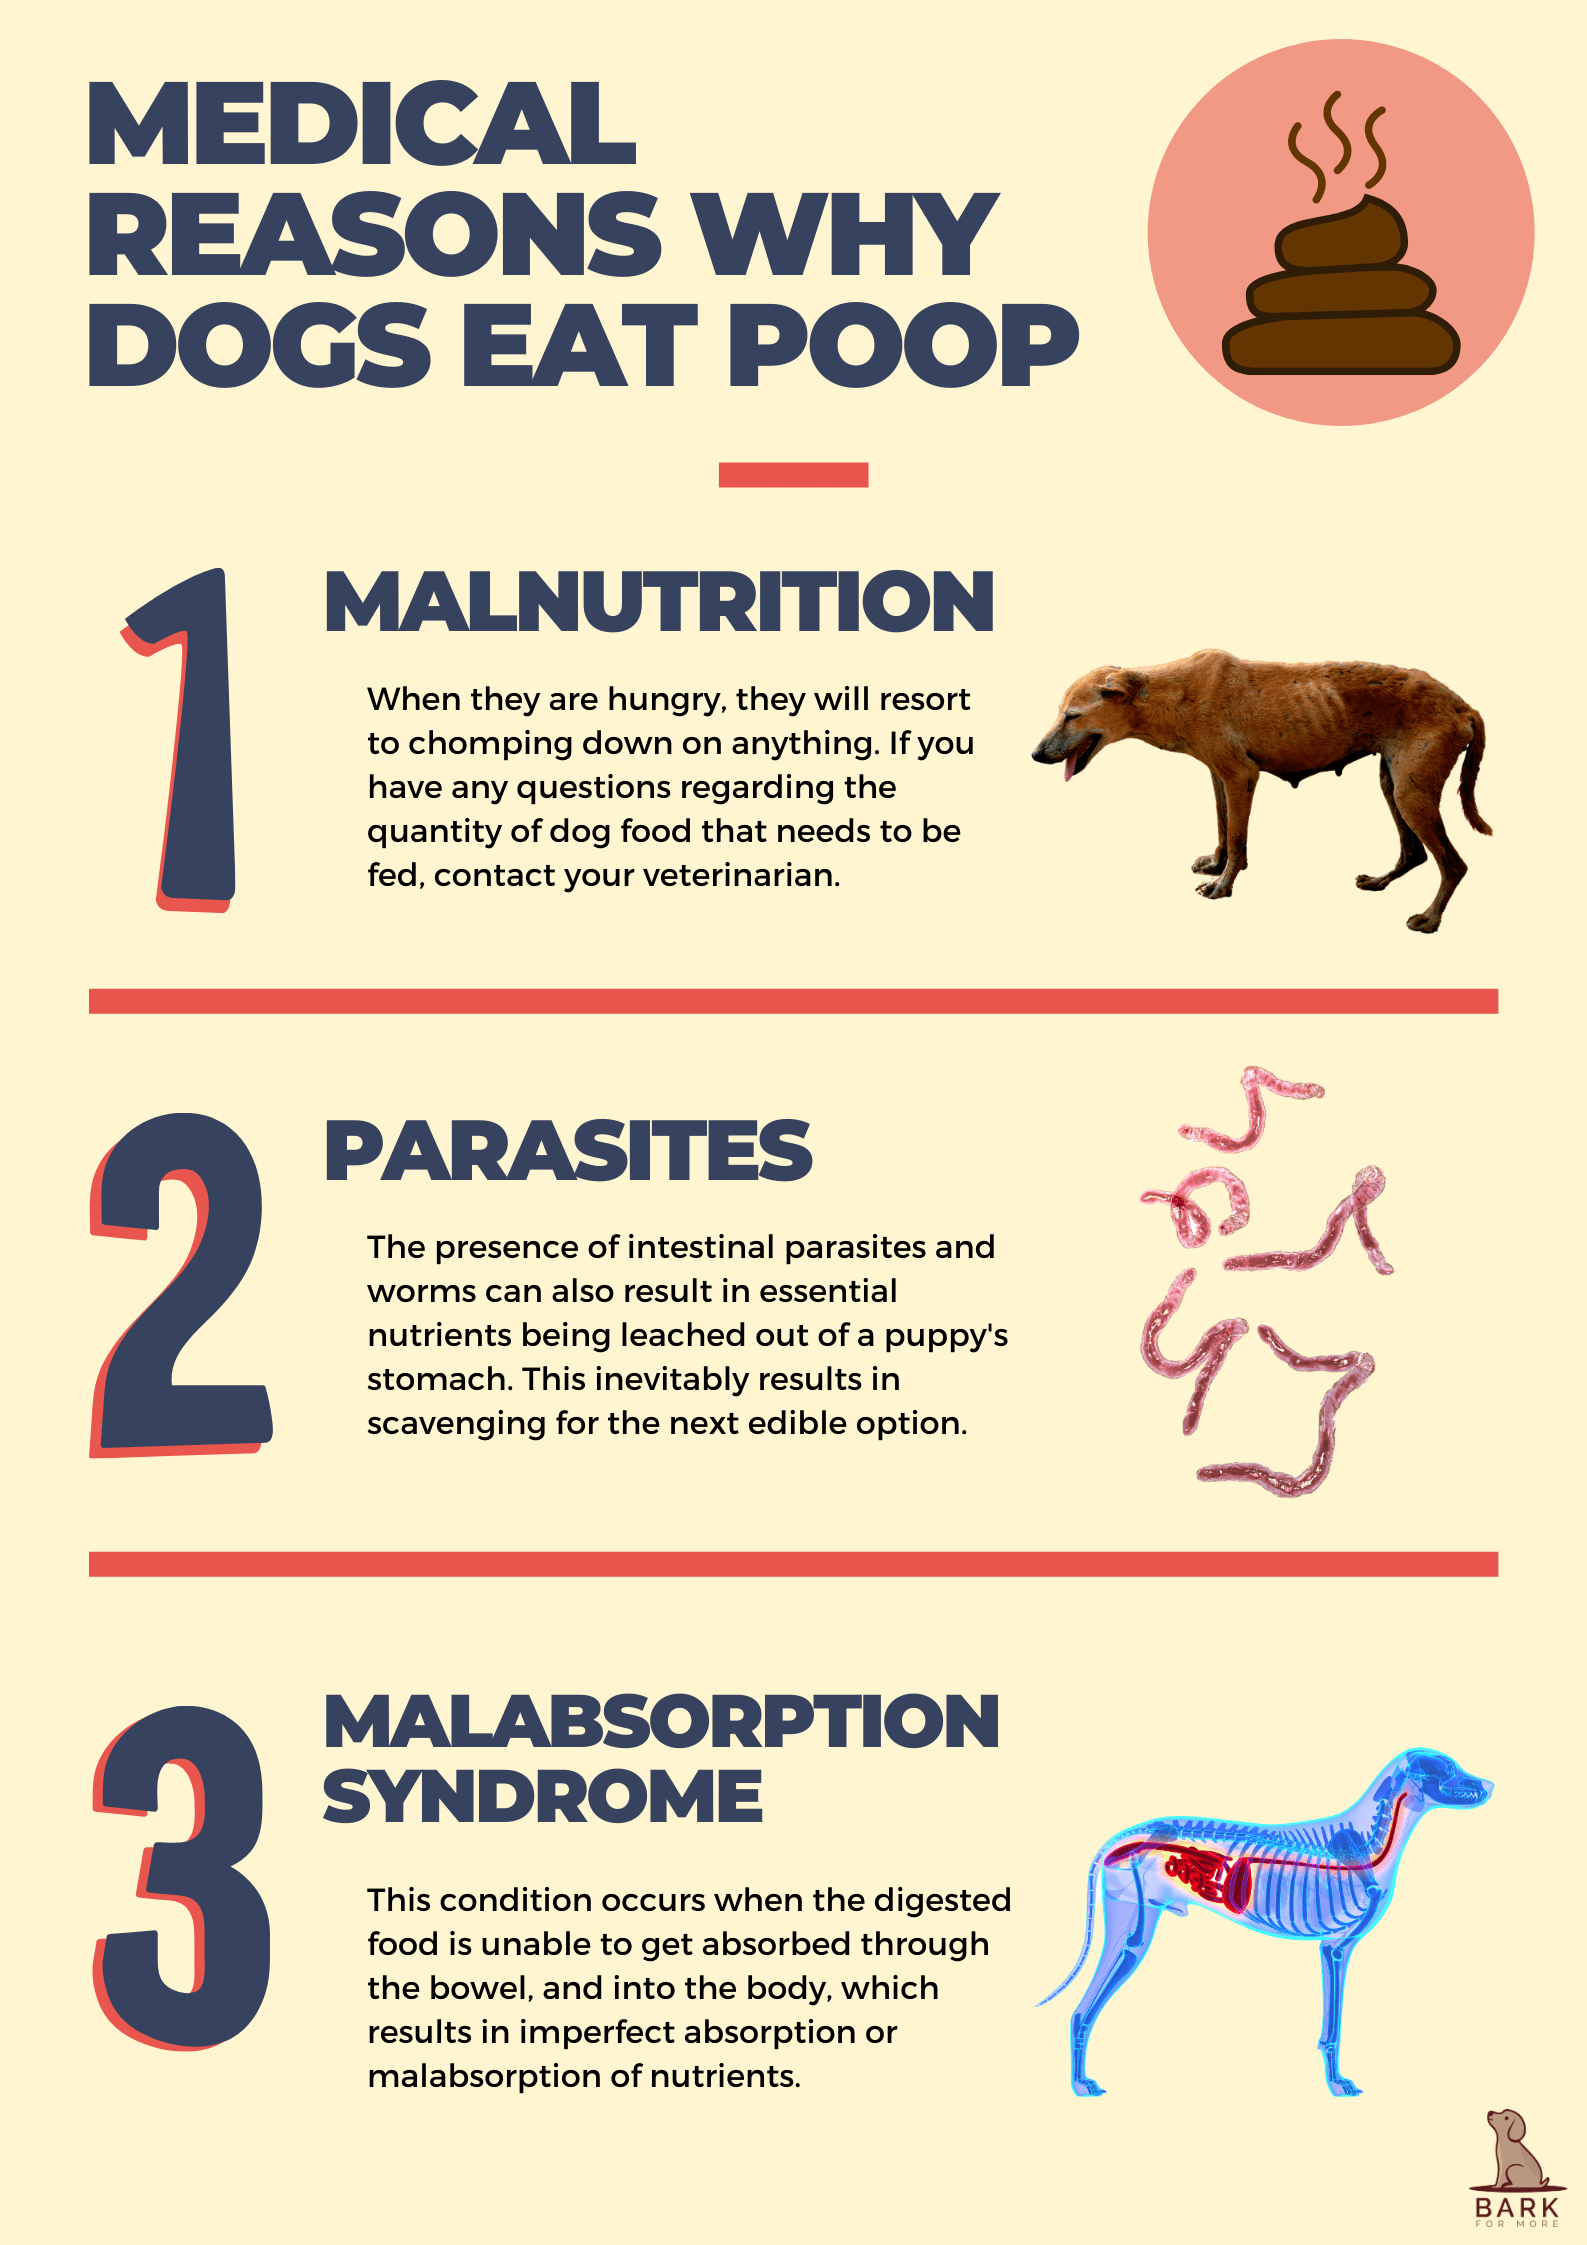 Medical reasons why dogs eat poop